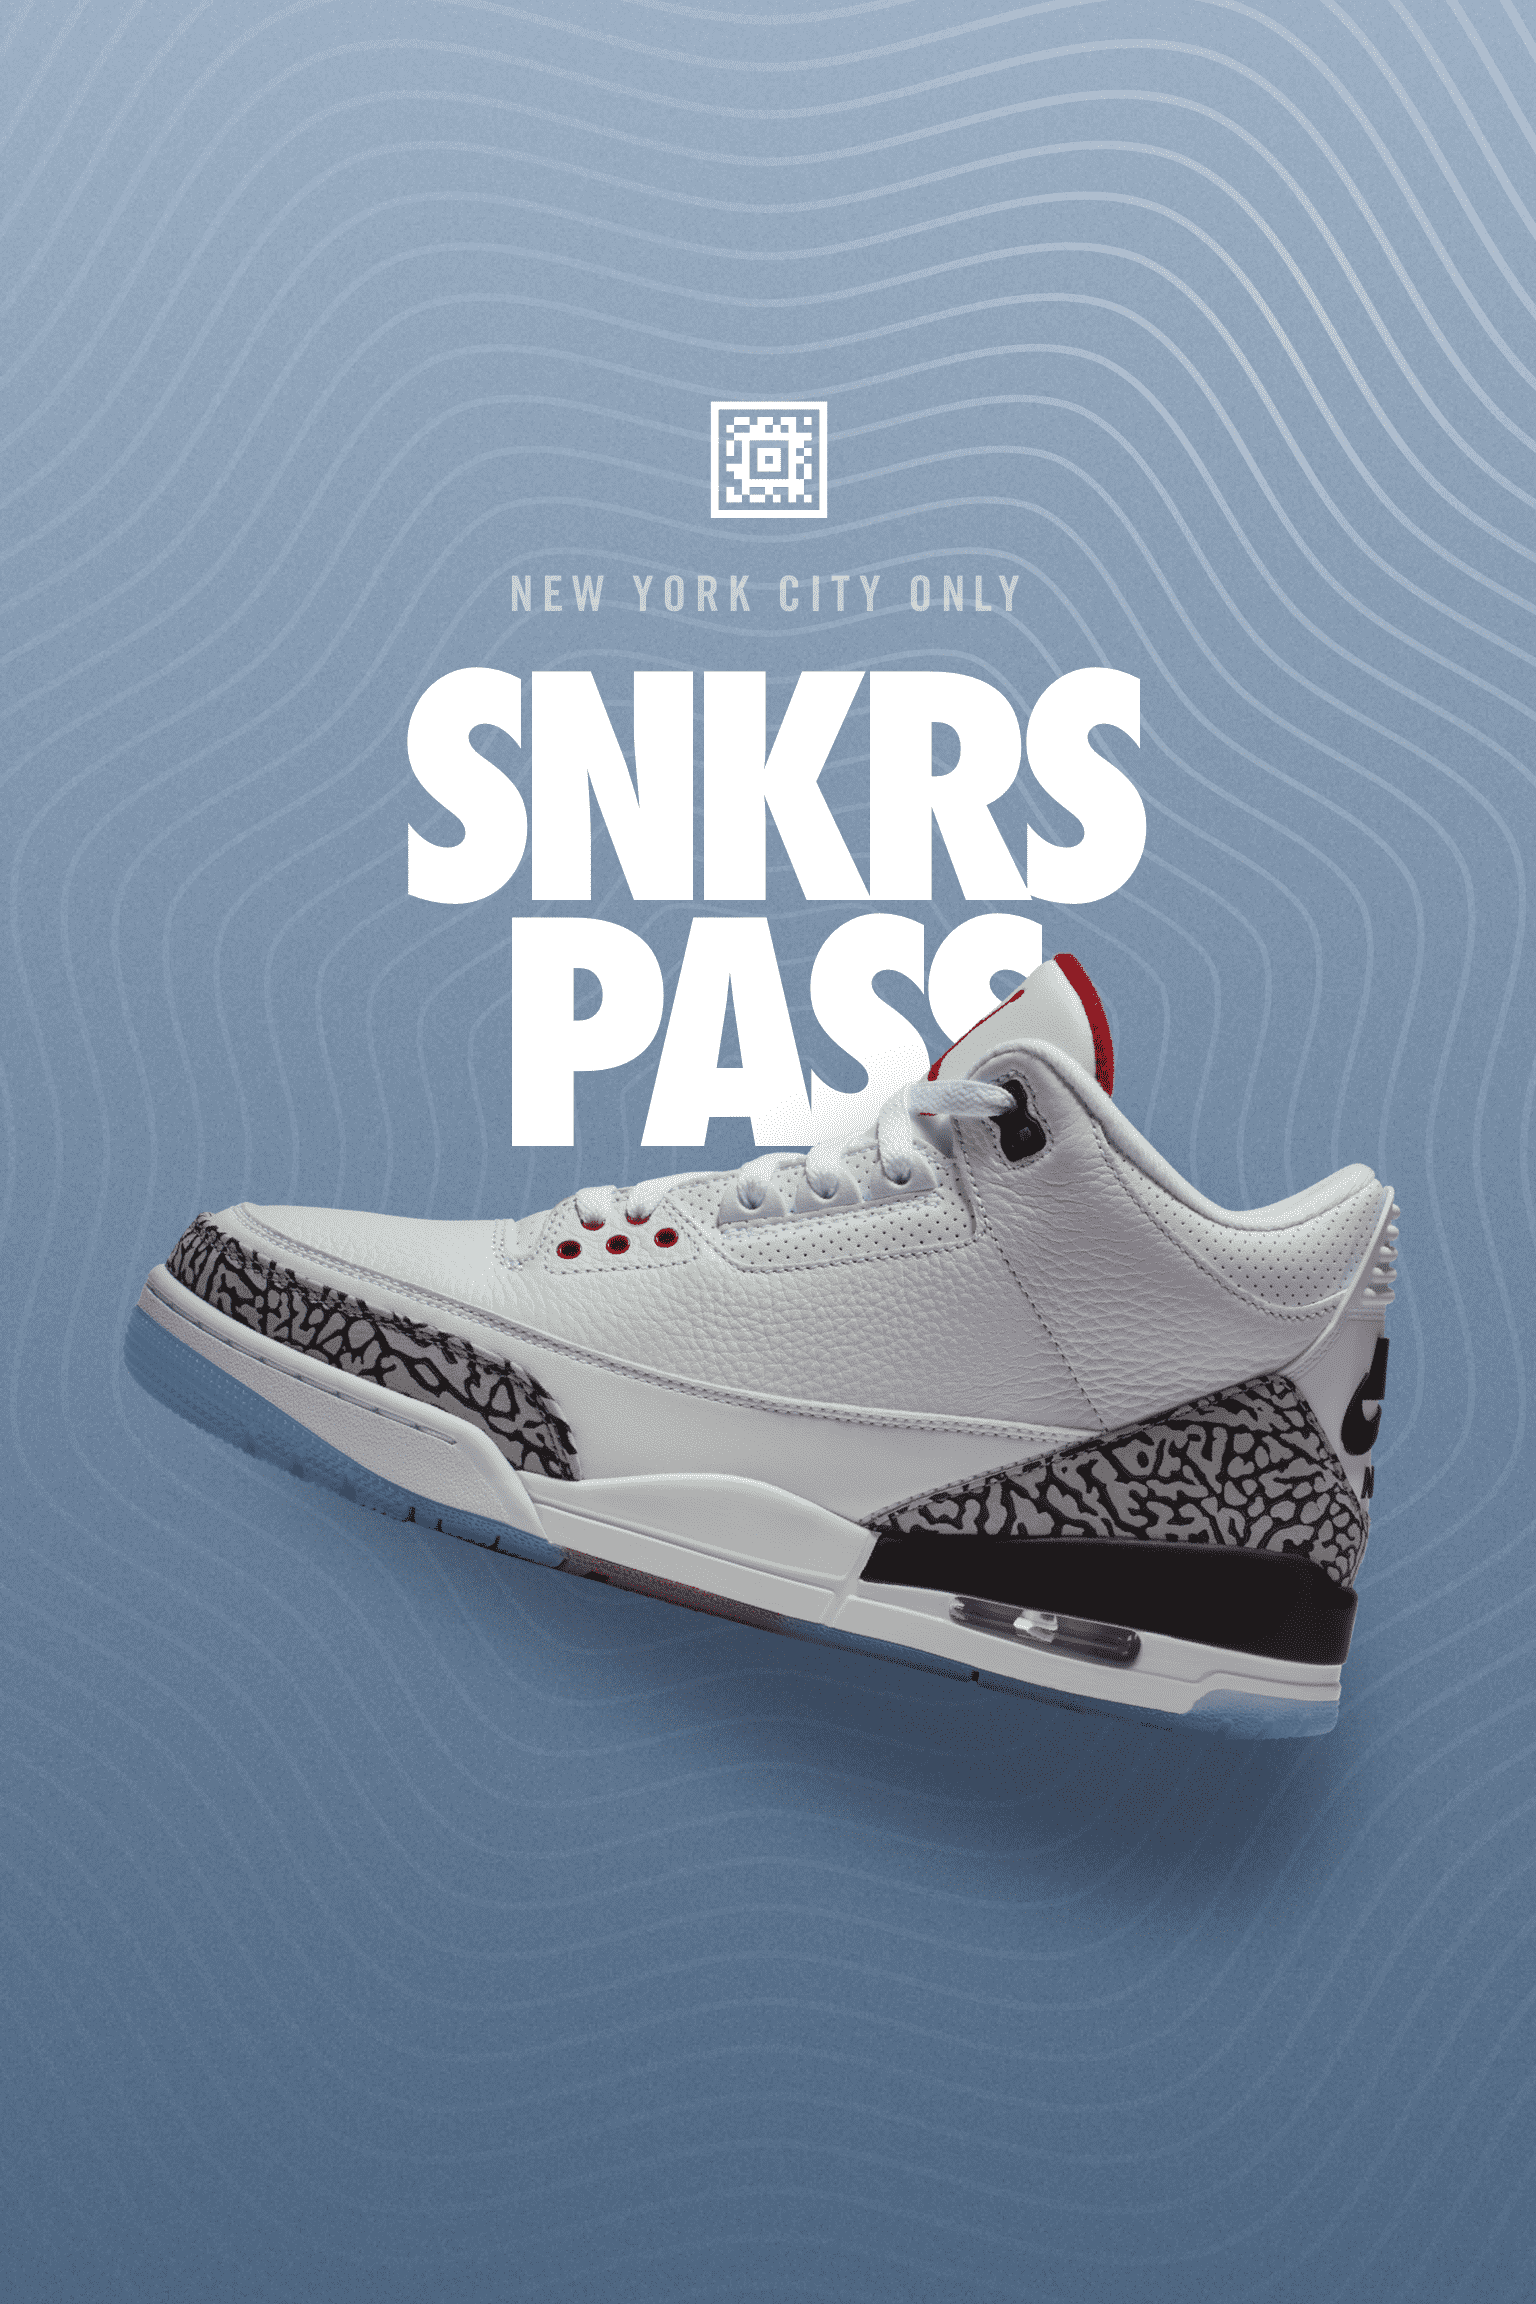 Jordan 3 'Free Line' Pass NYC. Nike SNKRS